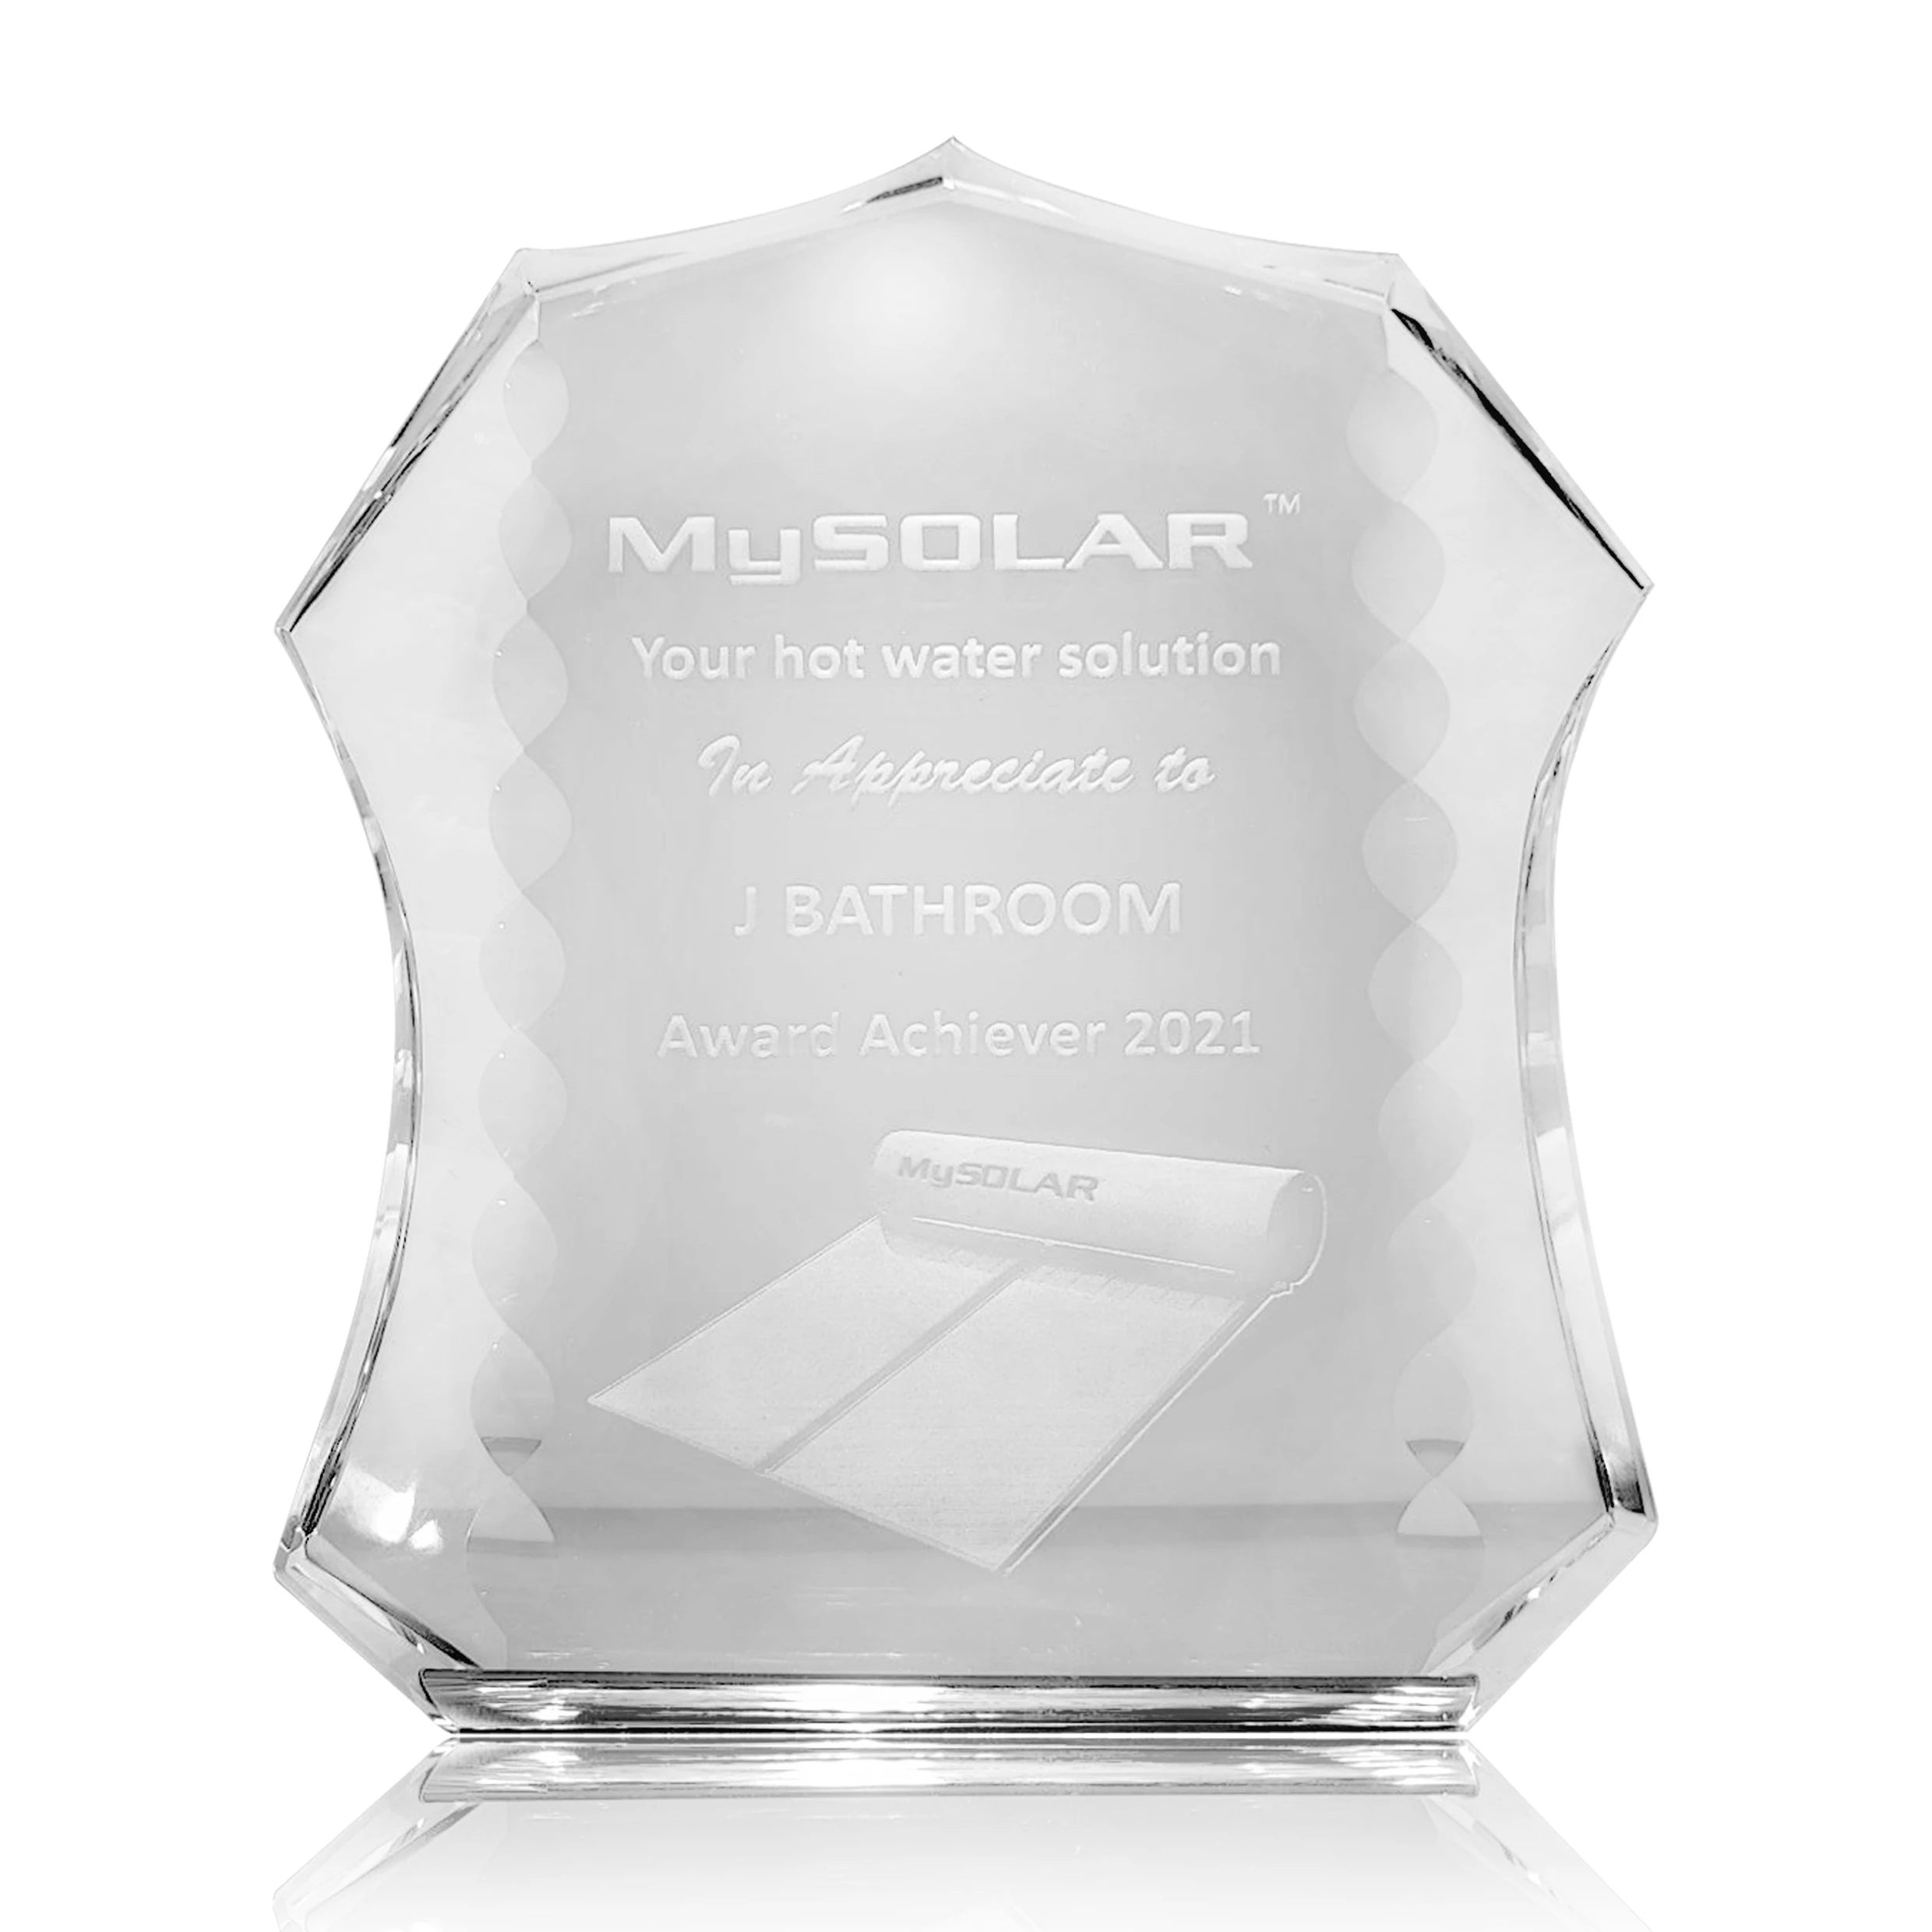 195-mysolar-award-achiever-2021-16836236064682.jpg